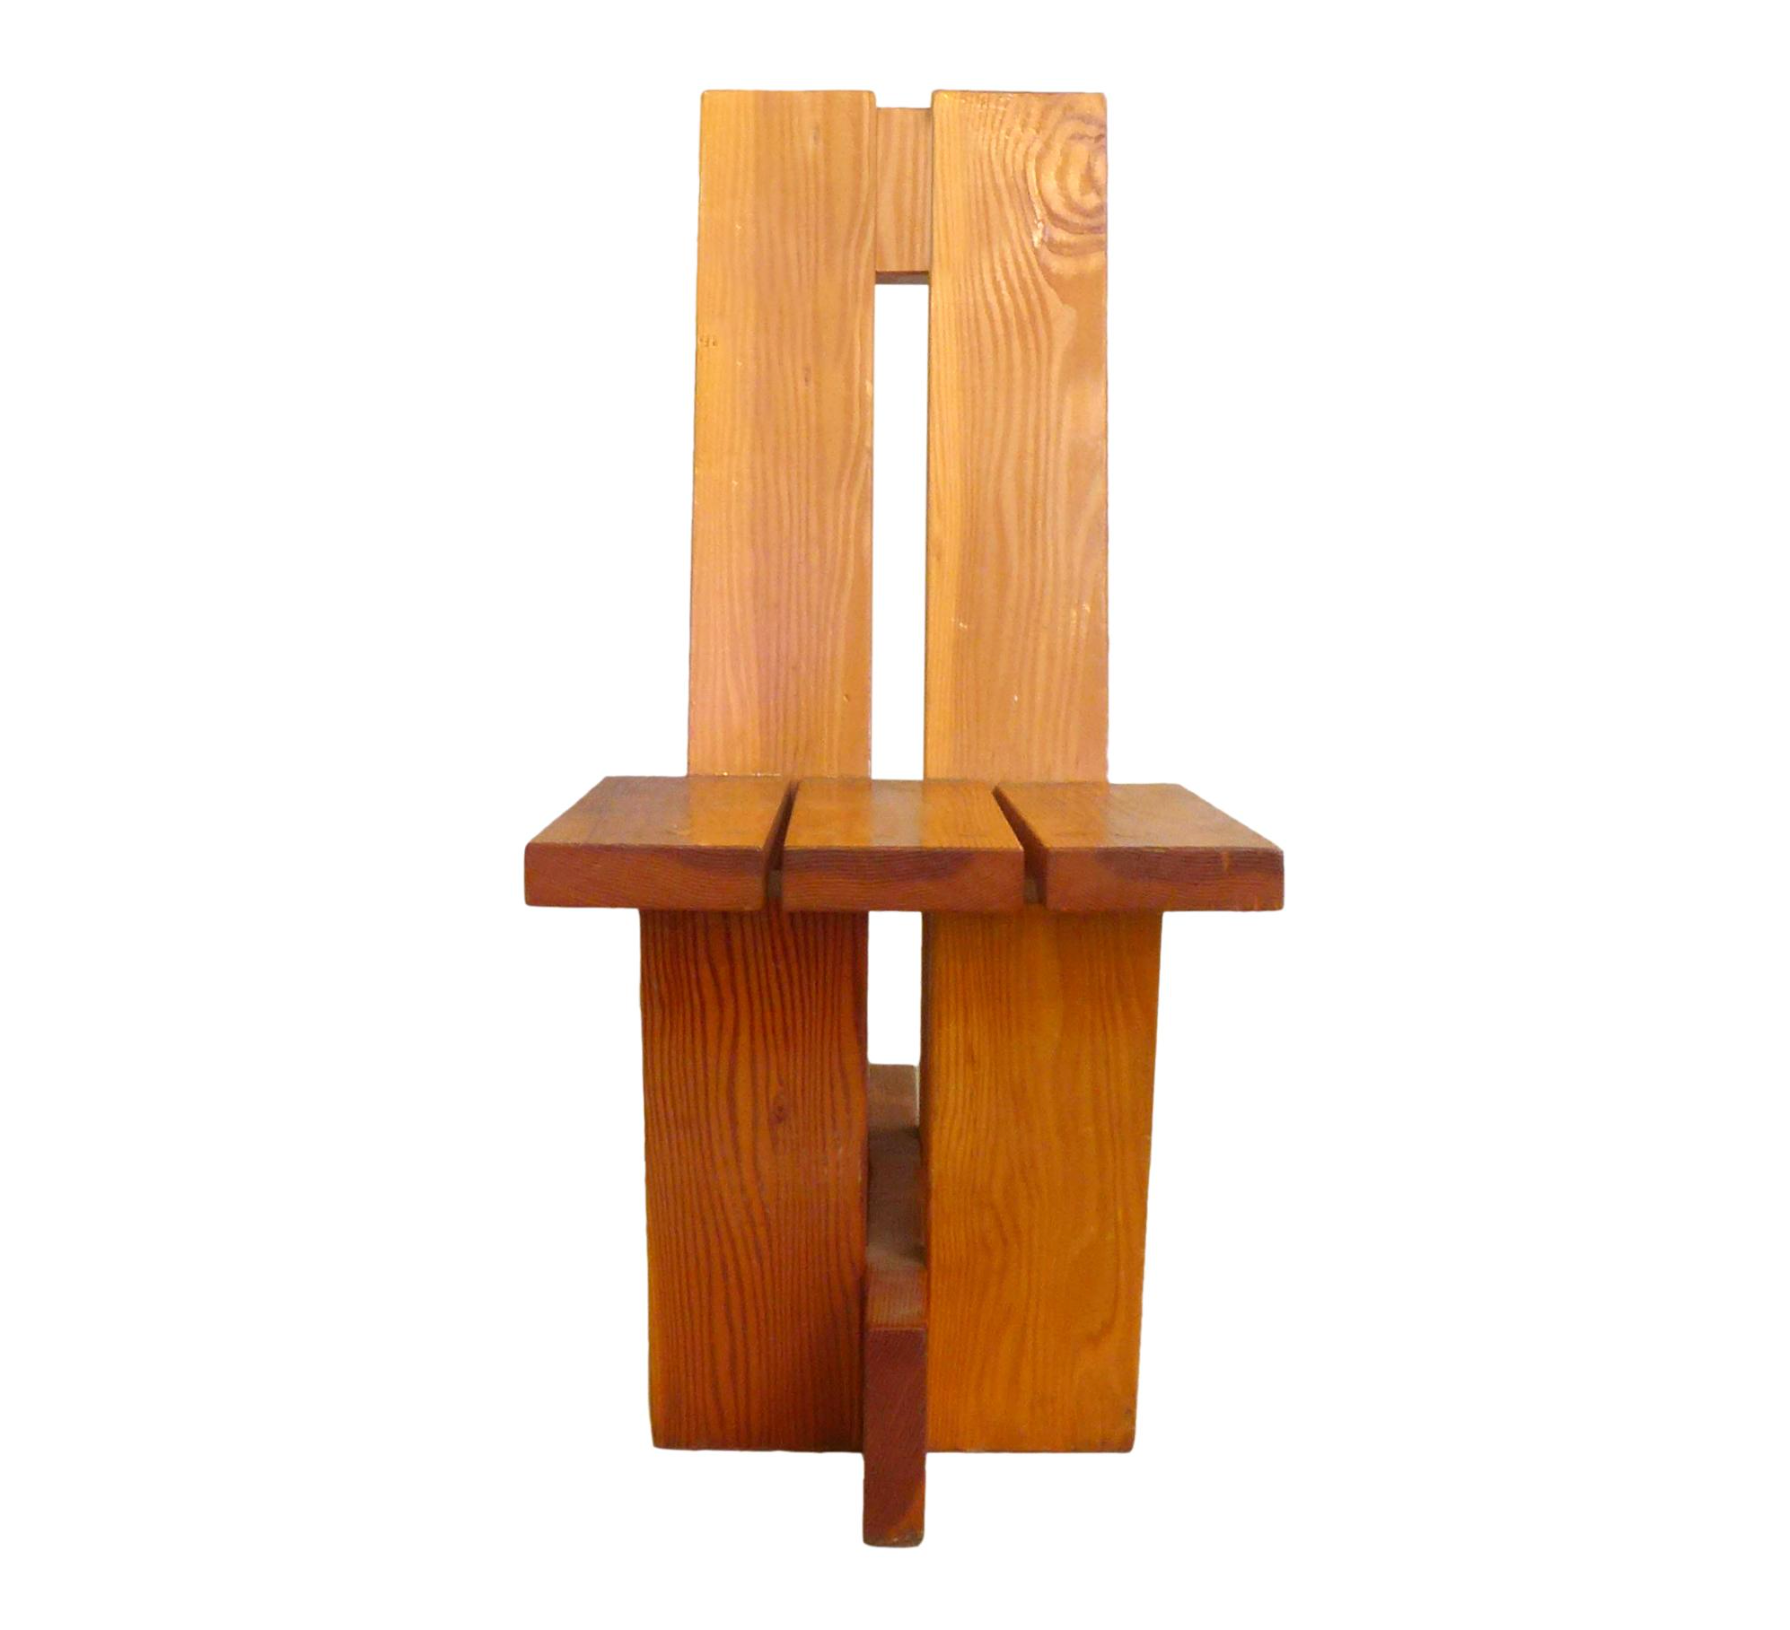 Constructivist Wood Side Chair